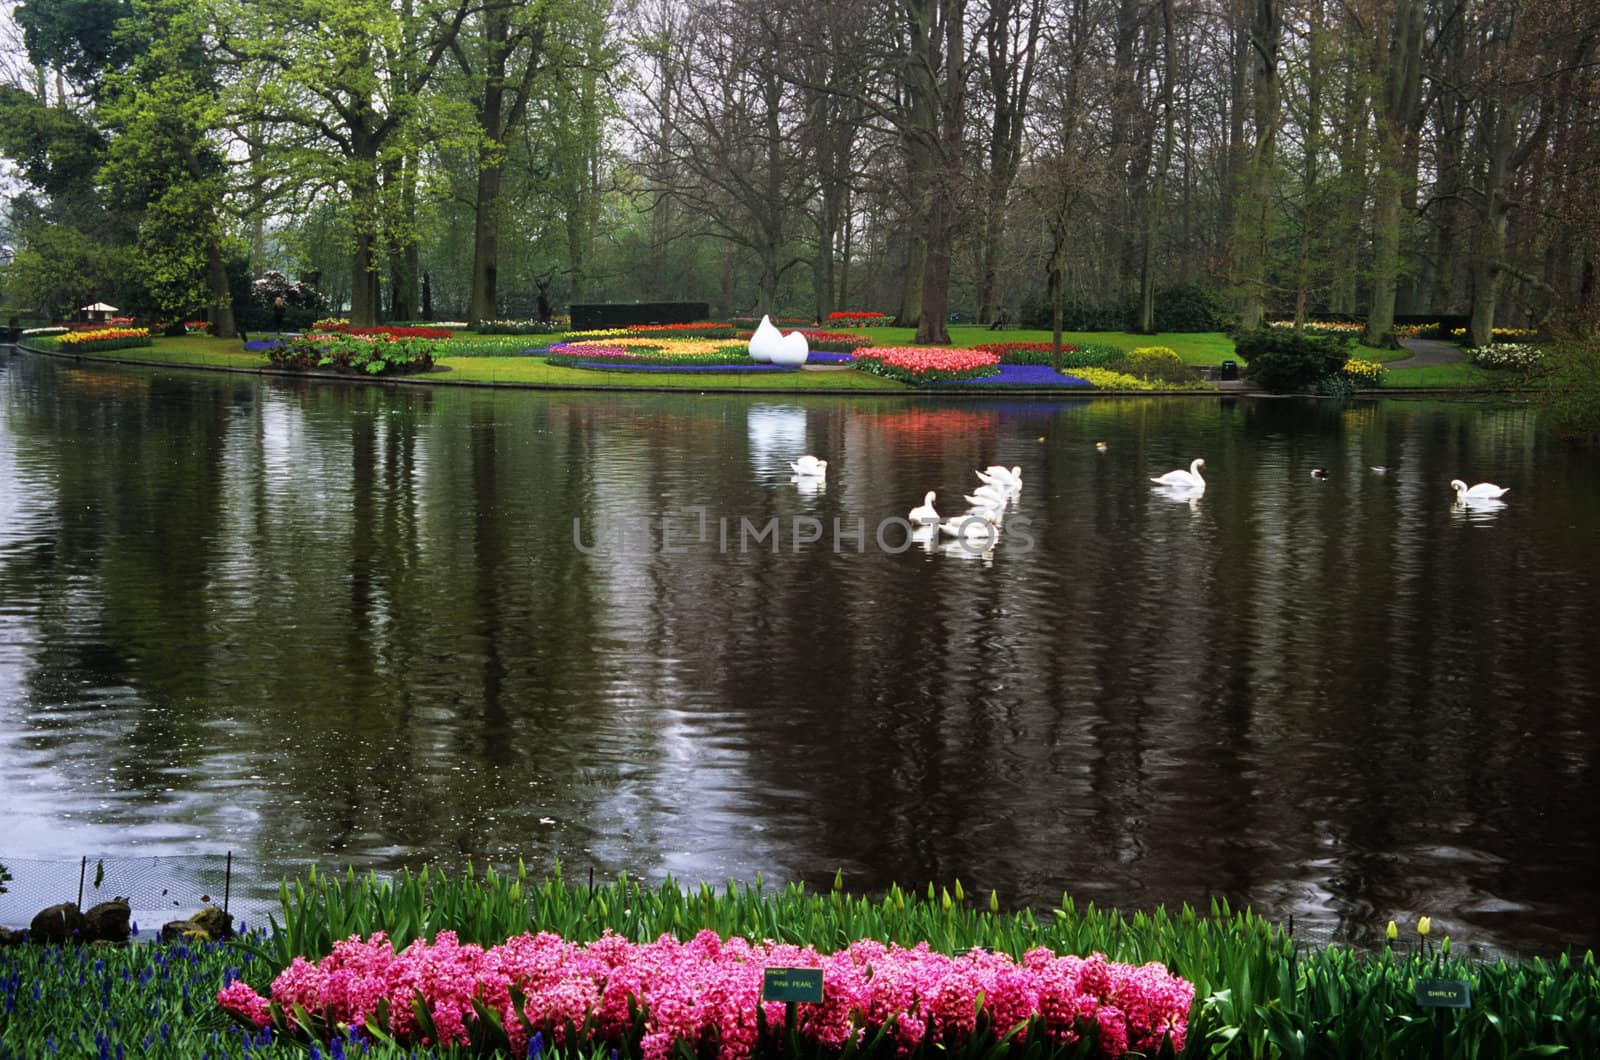 Swans at Keukenhof by ACMPhoto